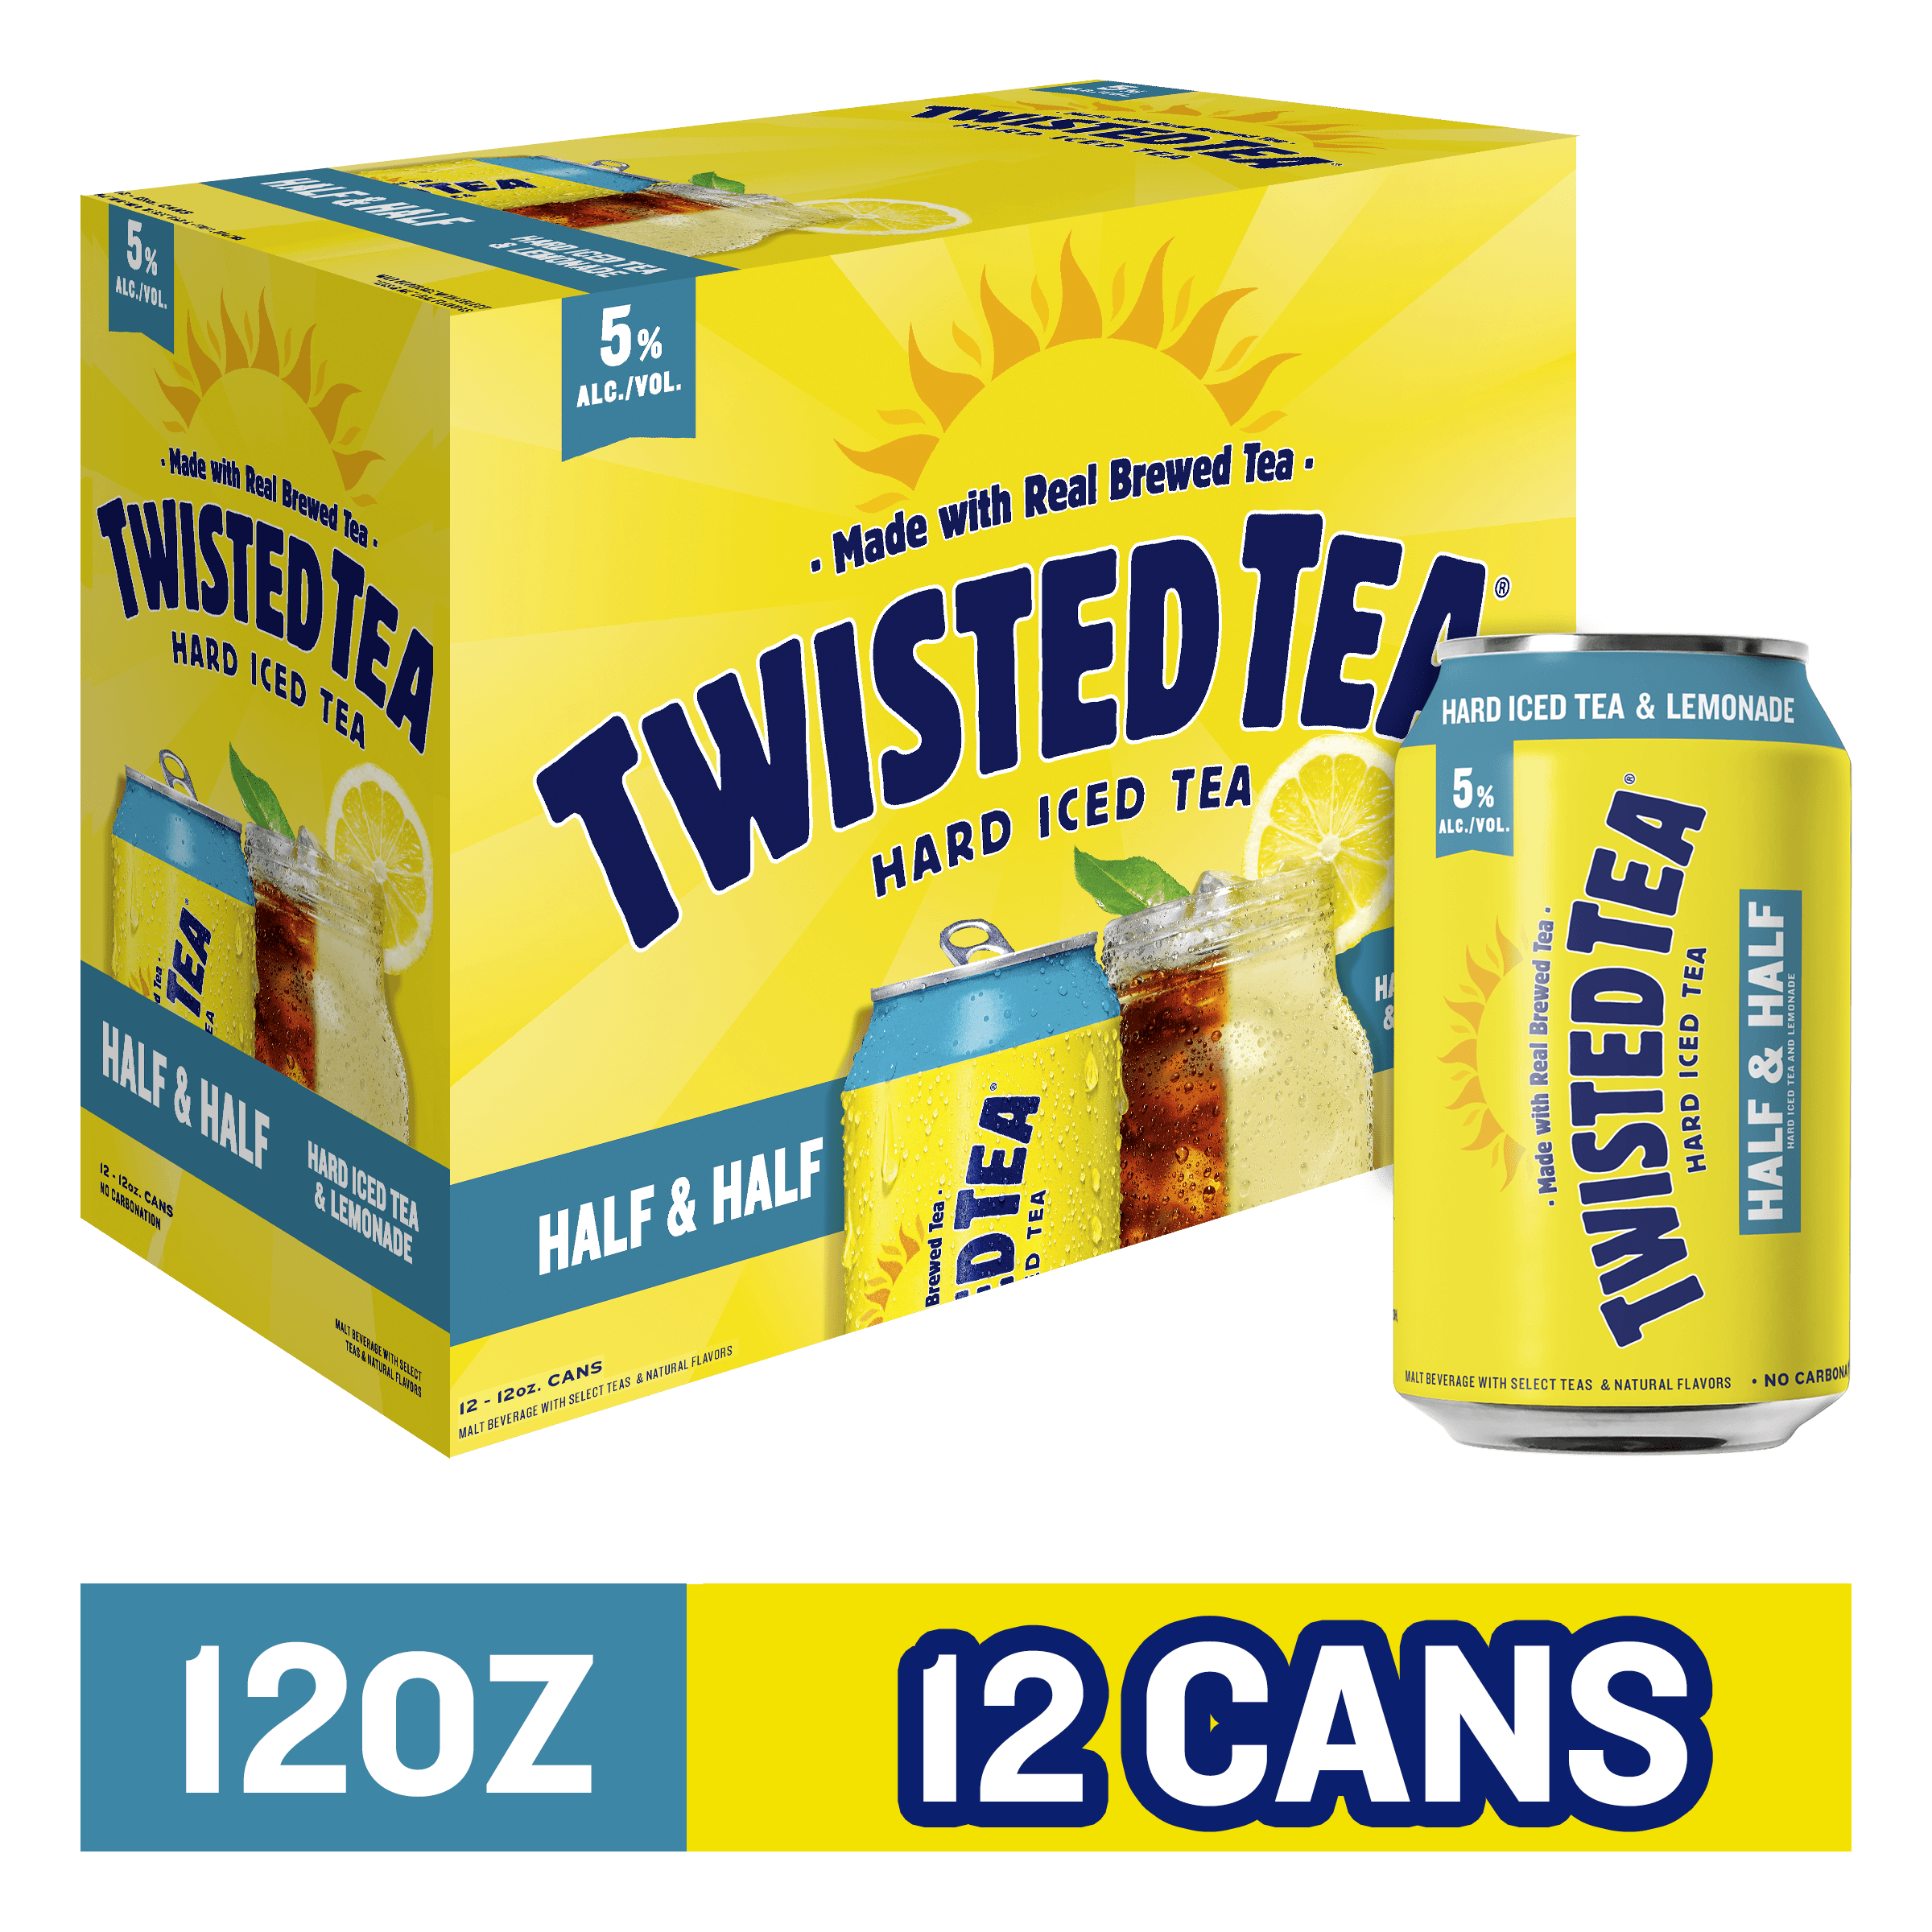 Twisted Tea Half & Half Hard Iced Tea 12pk can